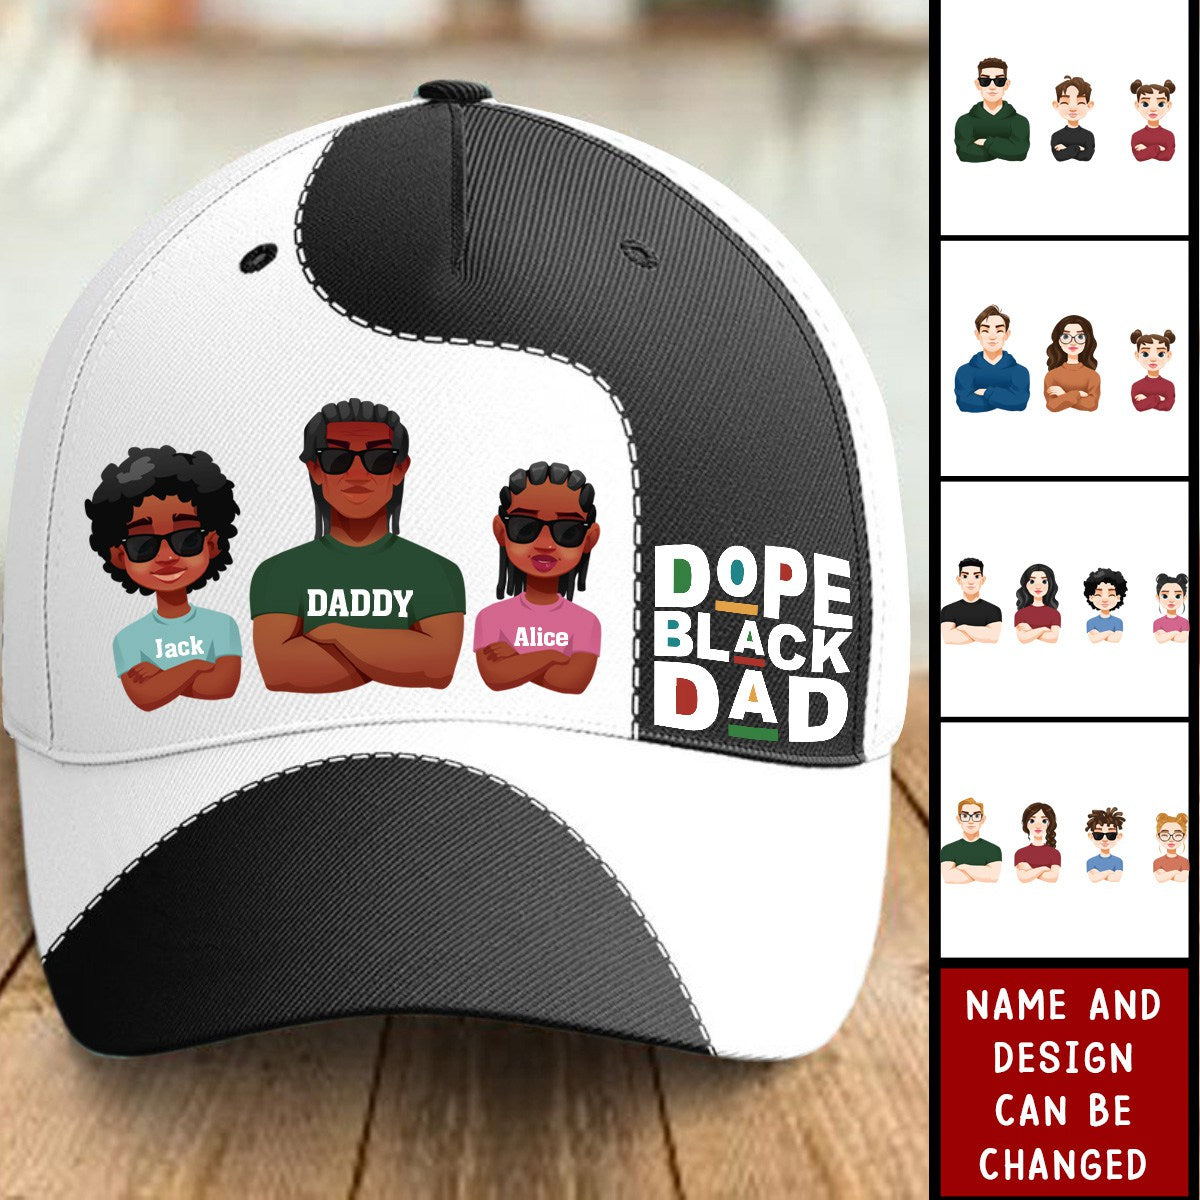 Dope Black Dad Ver 2 - Personalized Classic Cap